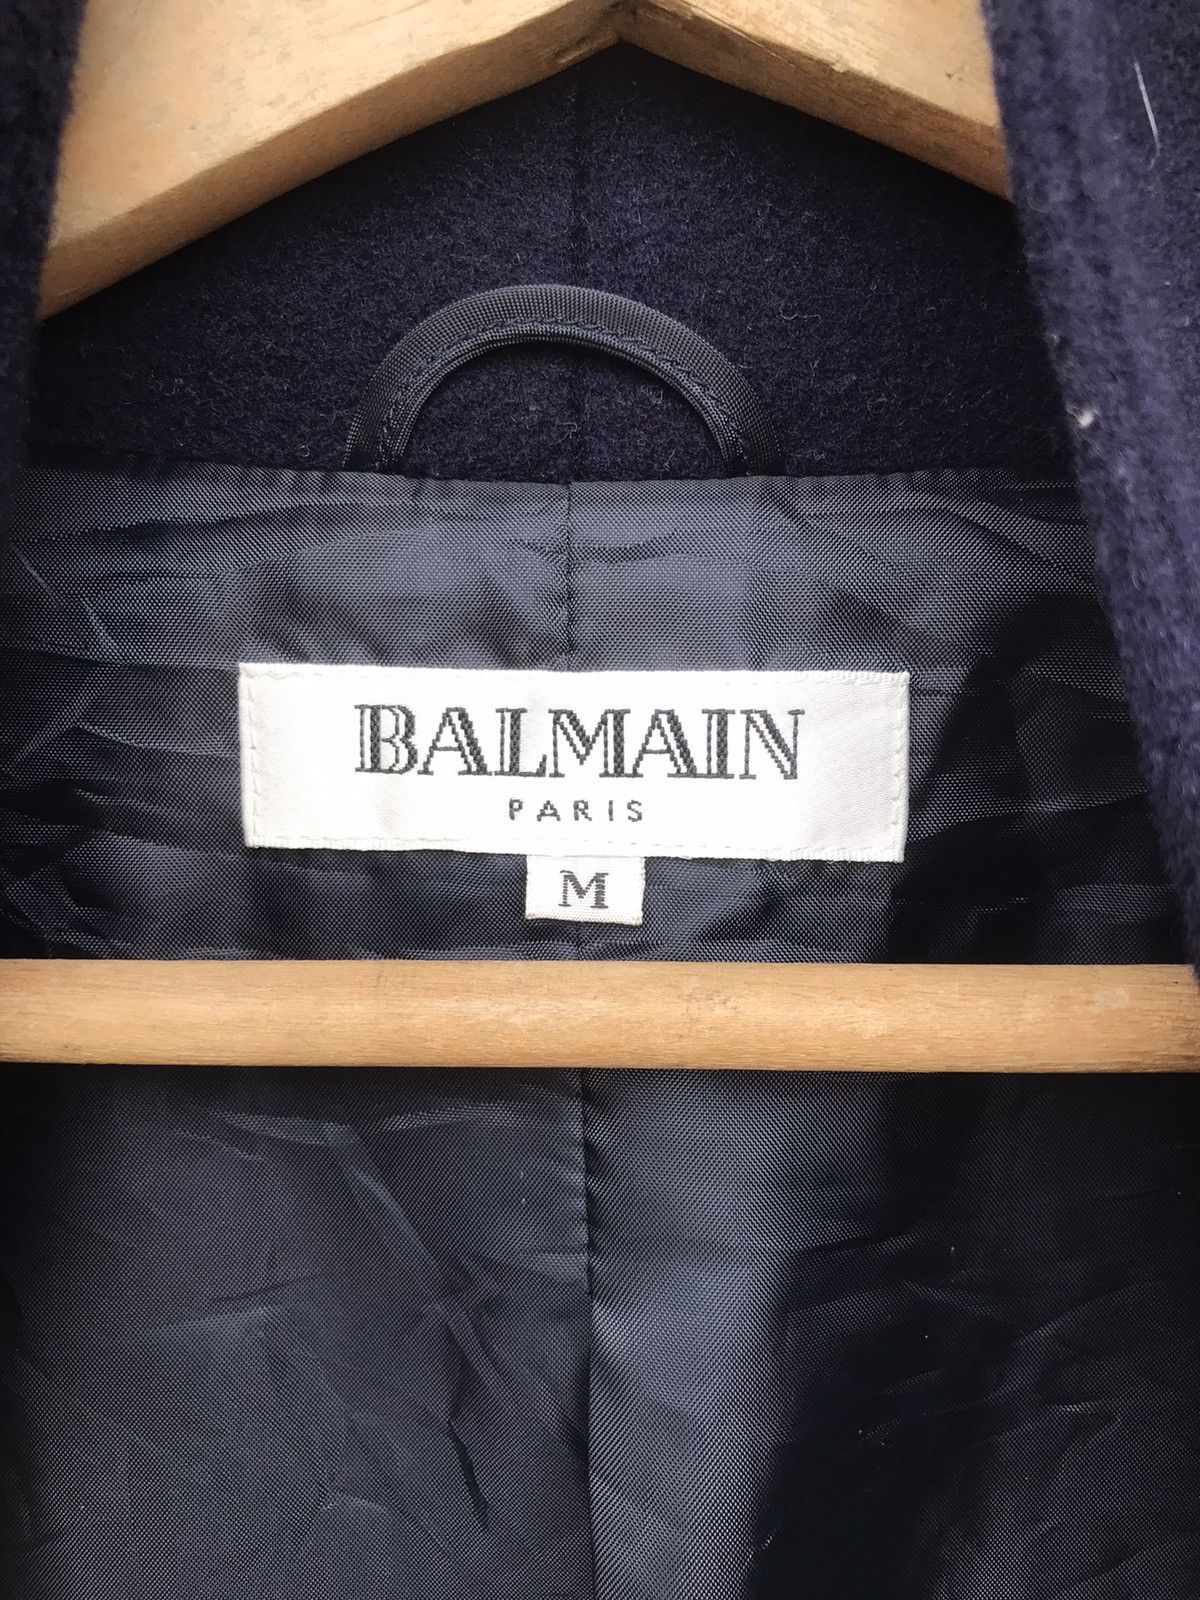 Balmain Paris Wool Belted Coat - 2